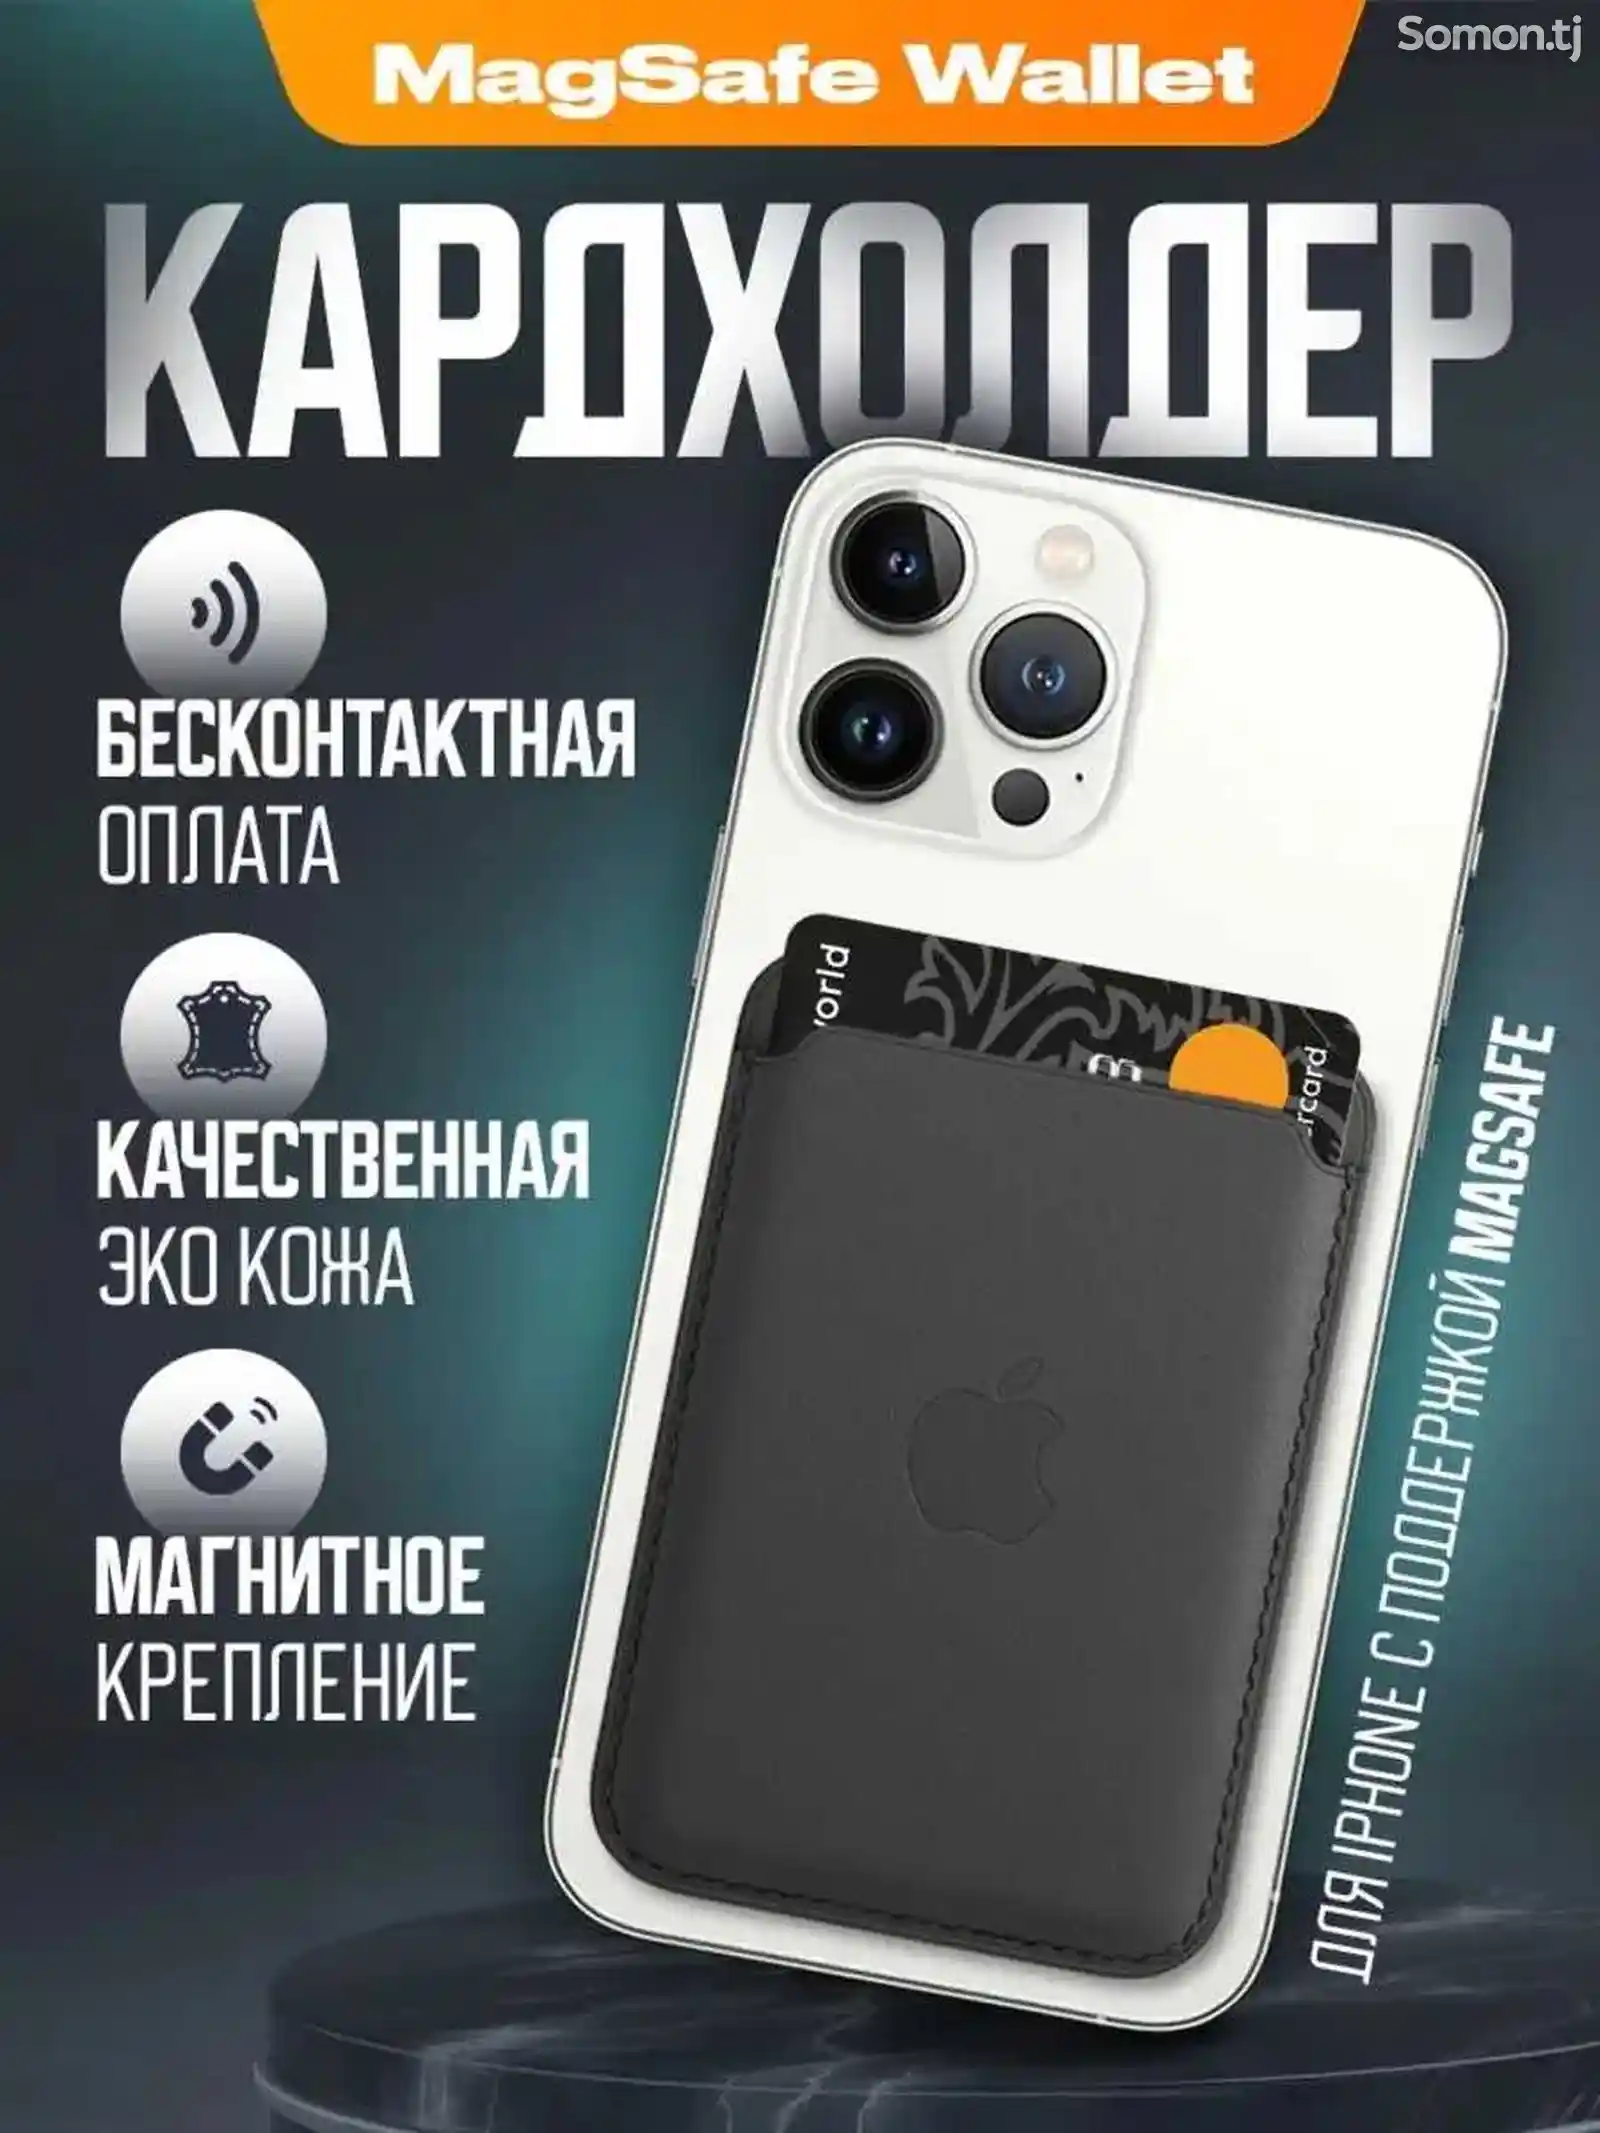 Картхолдер на iPhone Wallet MagSafe на заказ-2